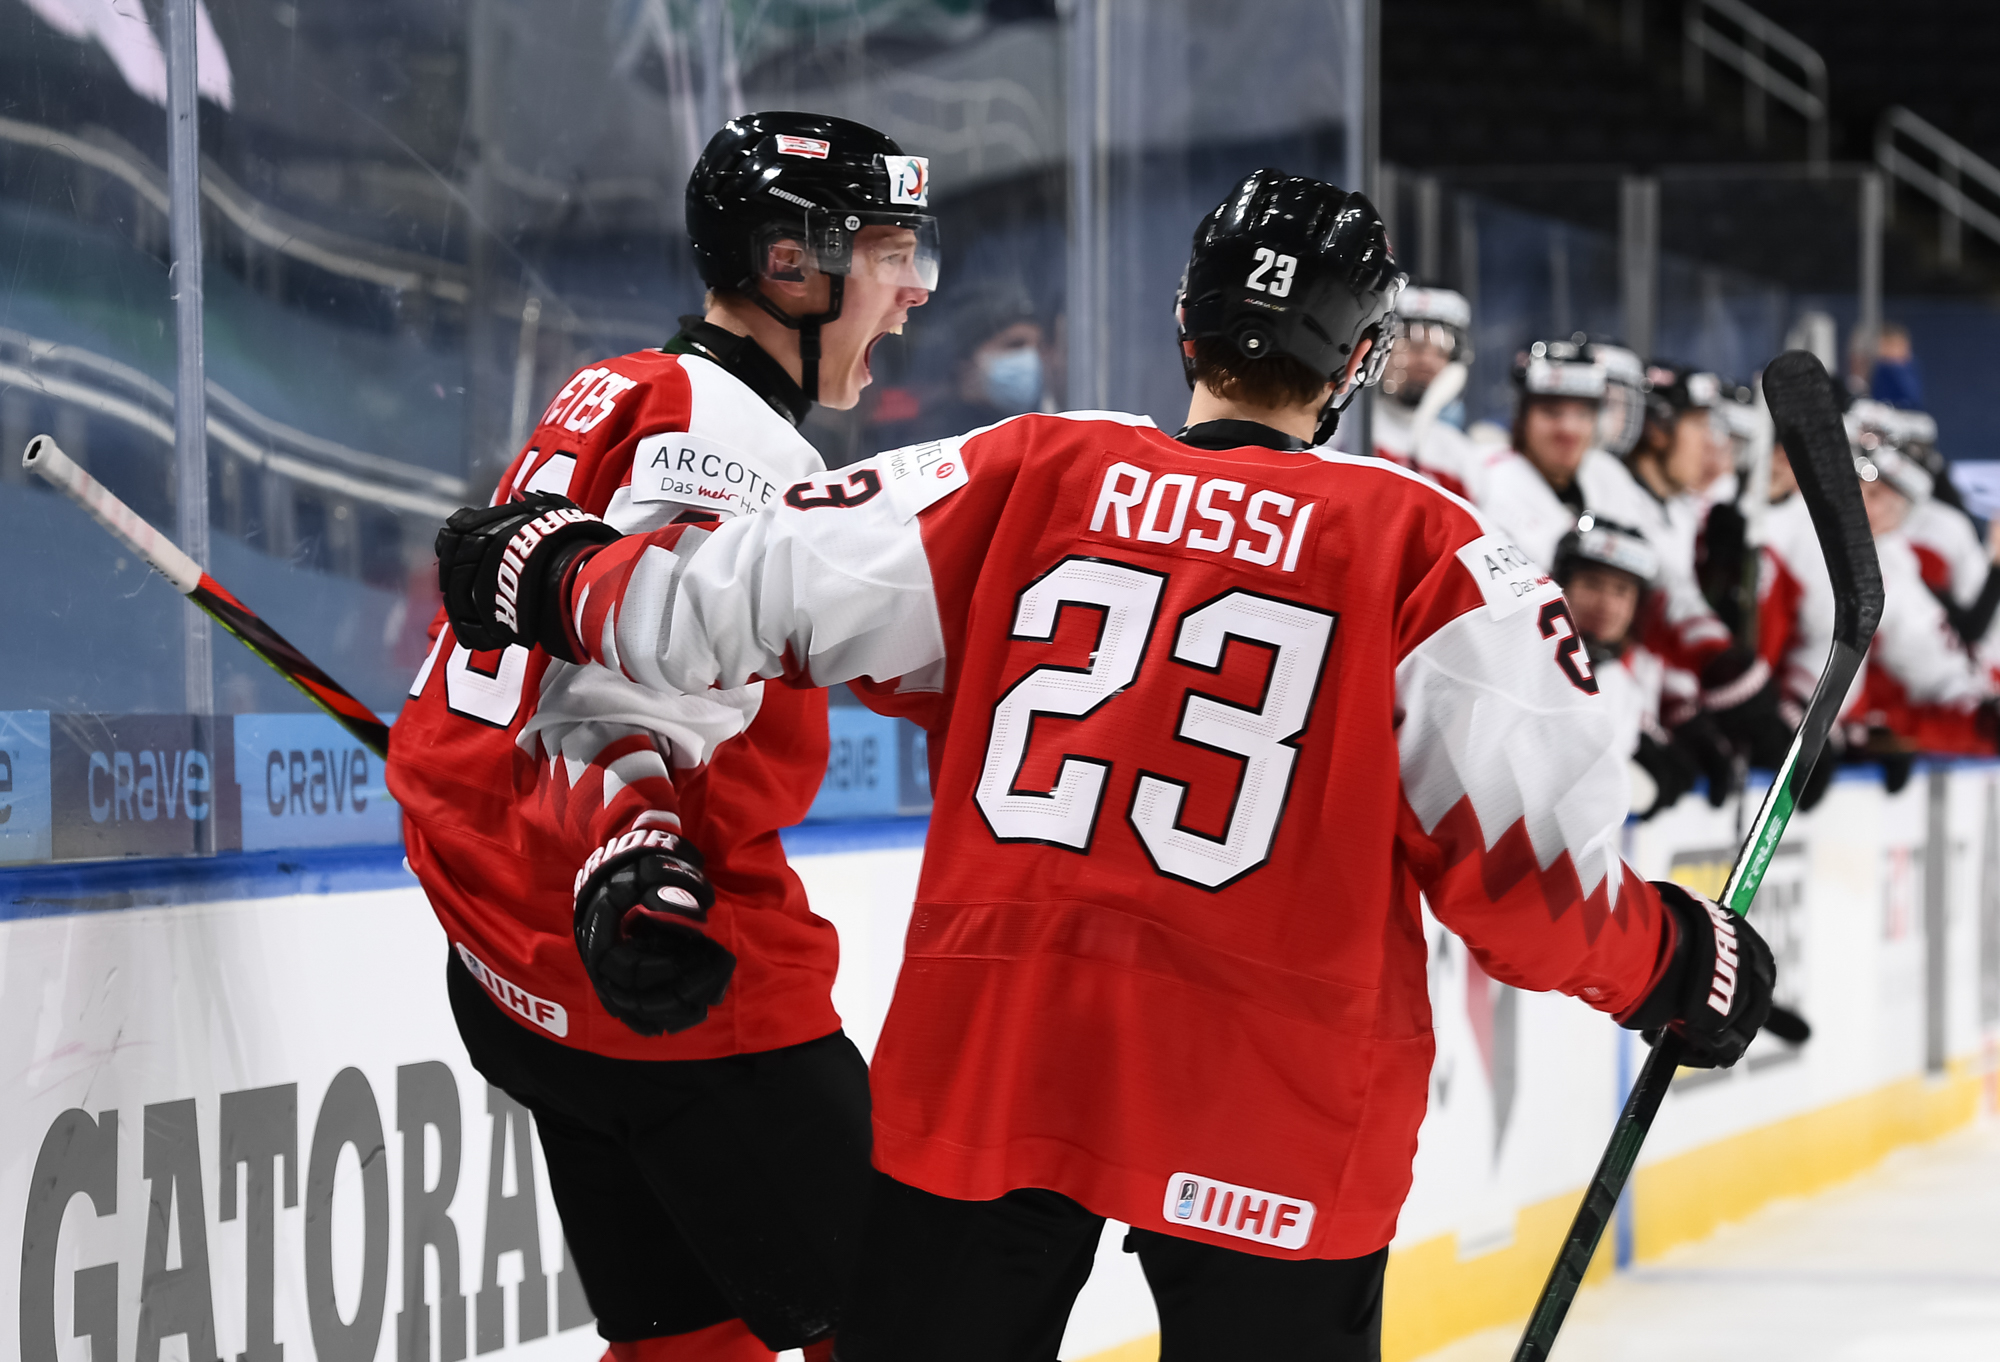 IIHF - Ponomaryov pots pair in Russian win